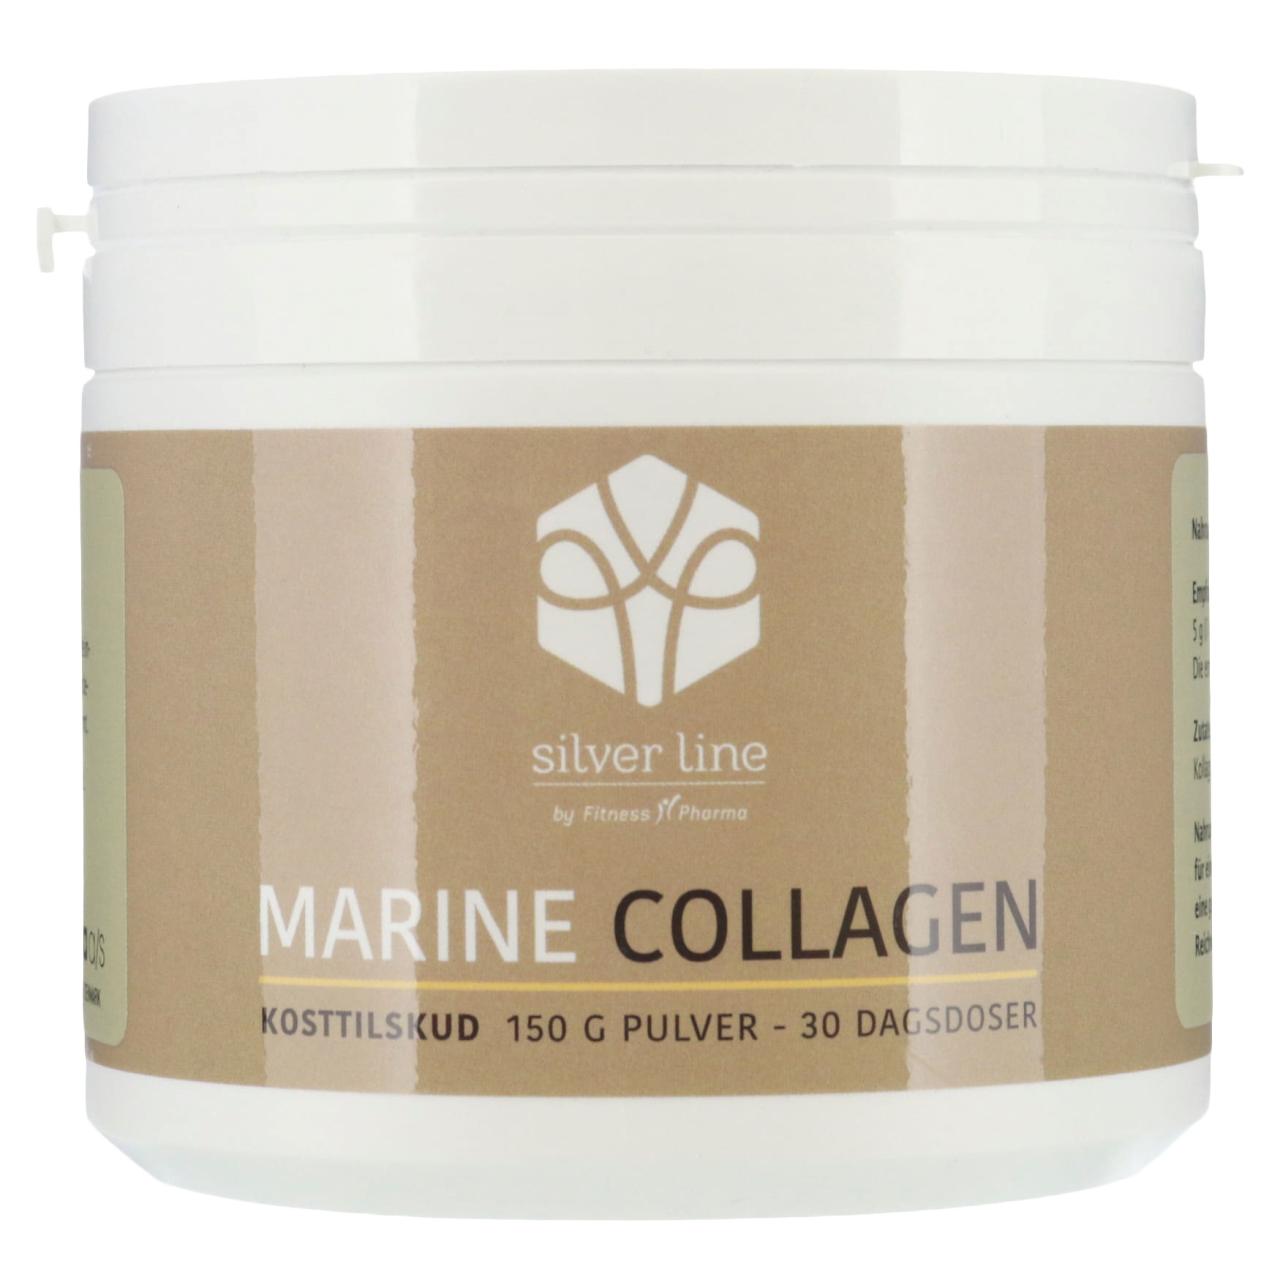 Fitness Pharma Marine Collagen Silver Line 150g